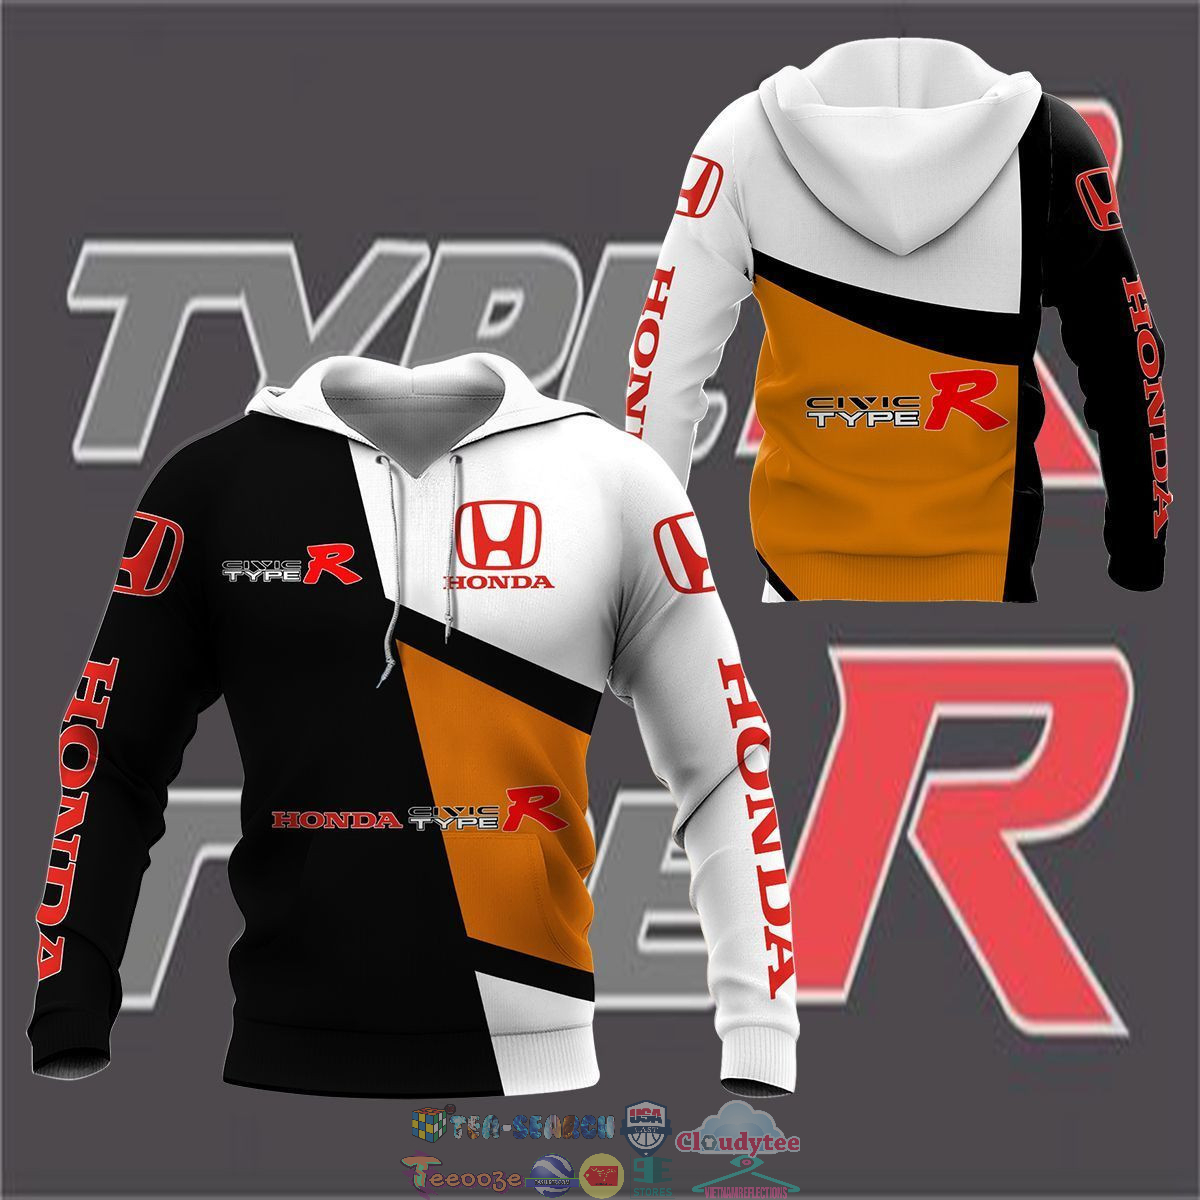 UlpfDlzn-TH130822-35xxxHonda-Civic-Type-R-ver-13-3D-hoodie-and-t-shirt3.jpg